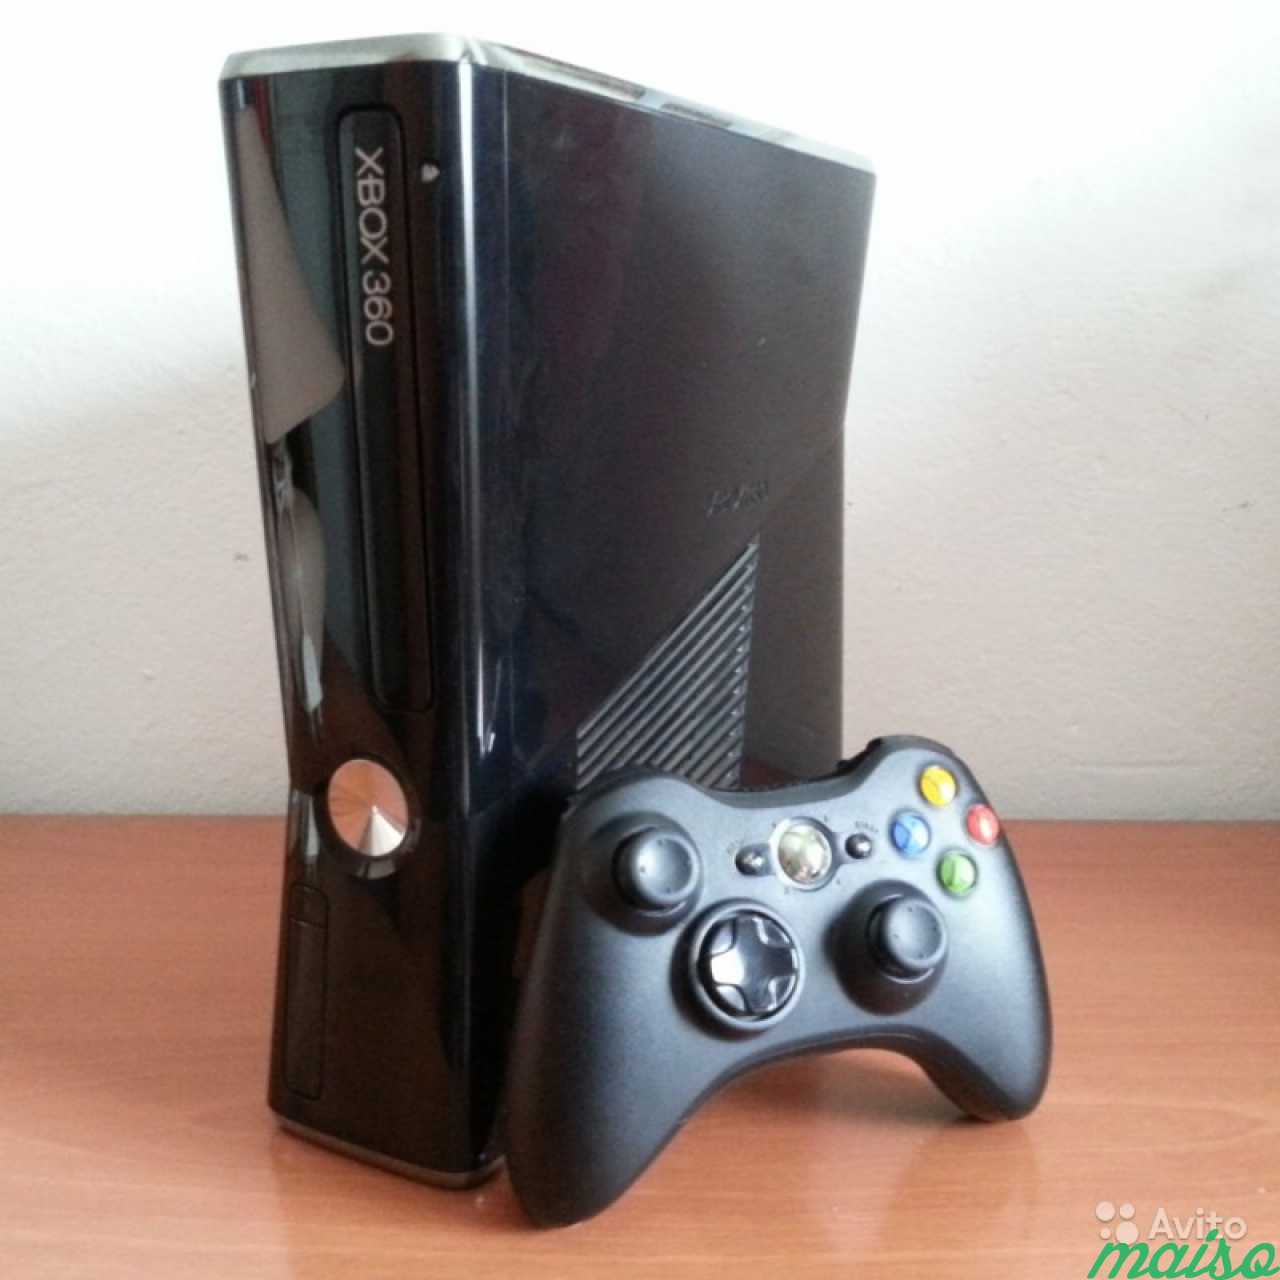 Хбокс купит бу. Xbox 360 Slim. Xbox 360 Slim freeboot. Xbox 360 Slim 360. Xbox 360 Slim 250gb.